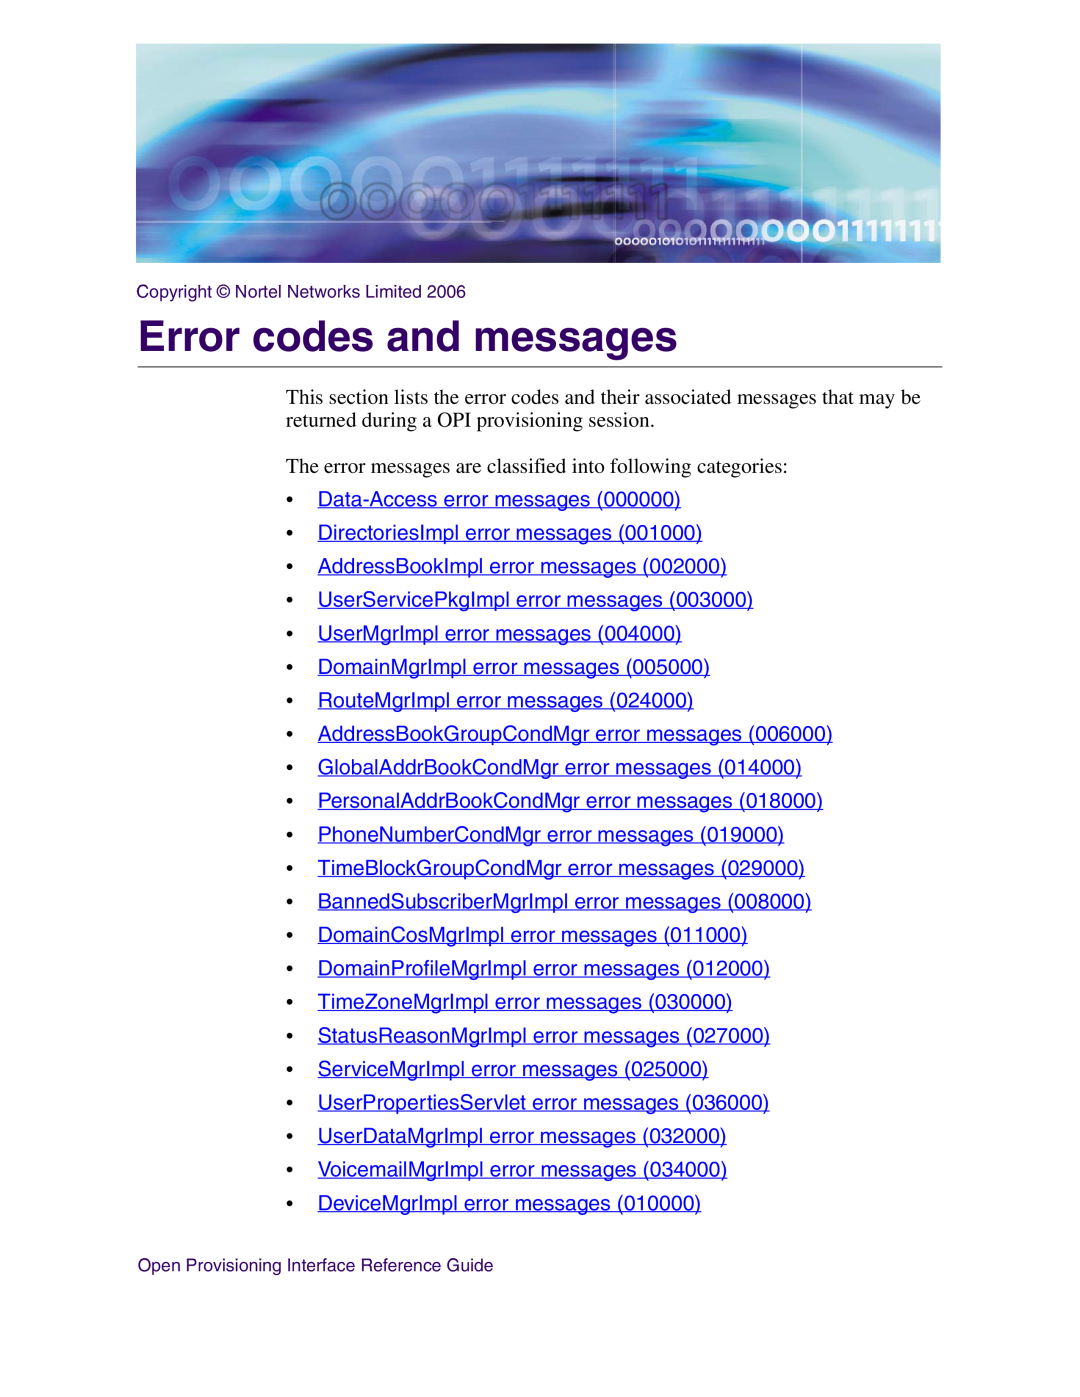 Nortel Networks NN42020-123 manual Error codes and messages, Data-Access error messages DirectoriesImpl error messages 